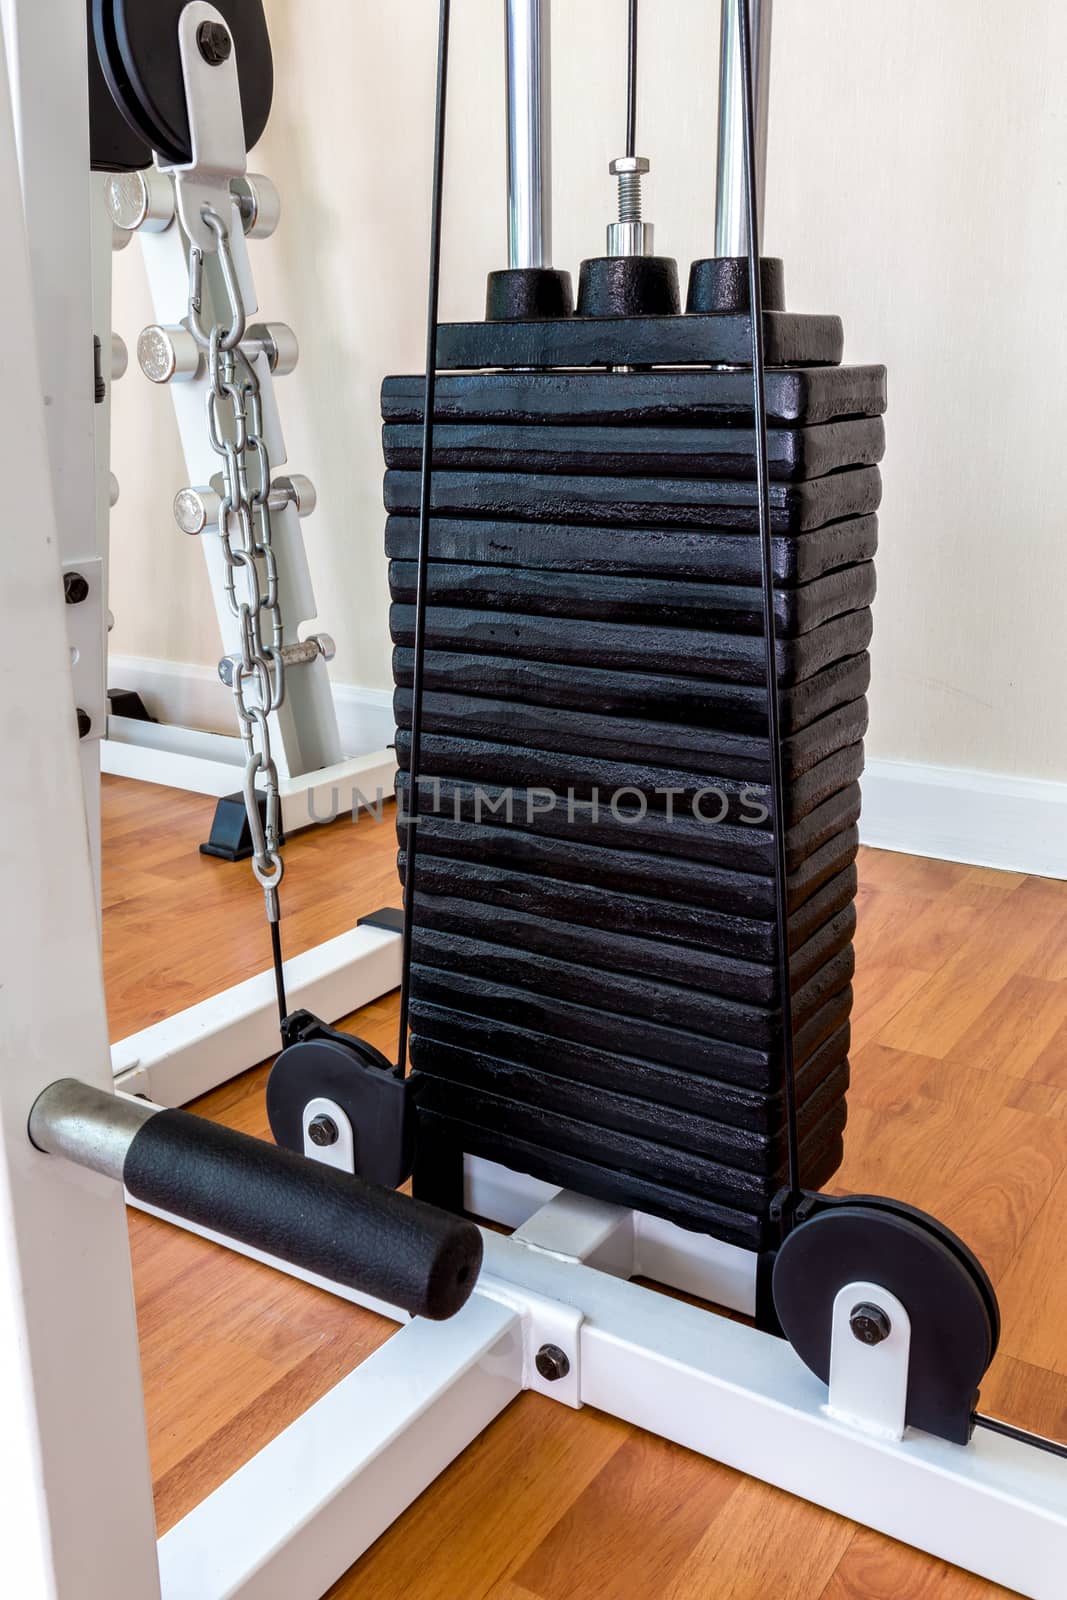 Weight training machine and equipment in gym